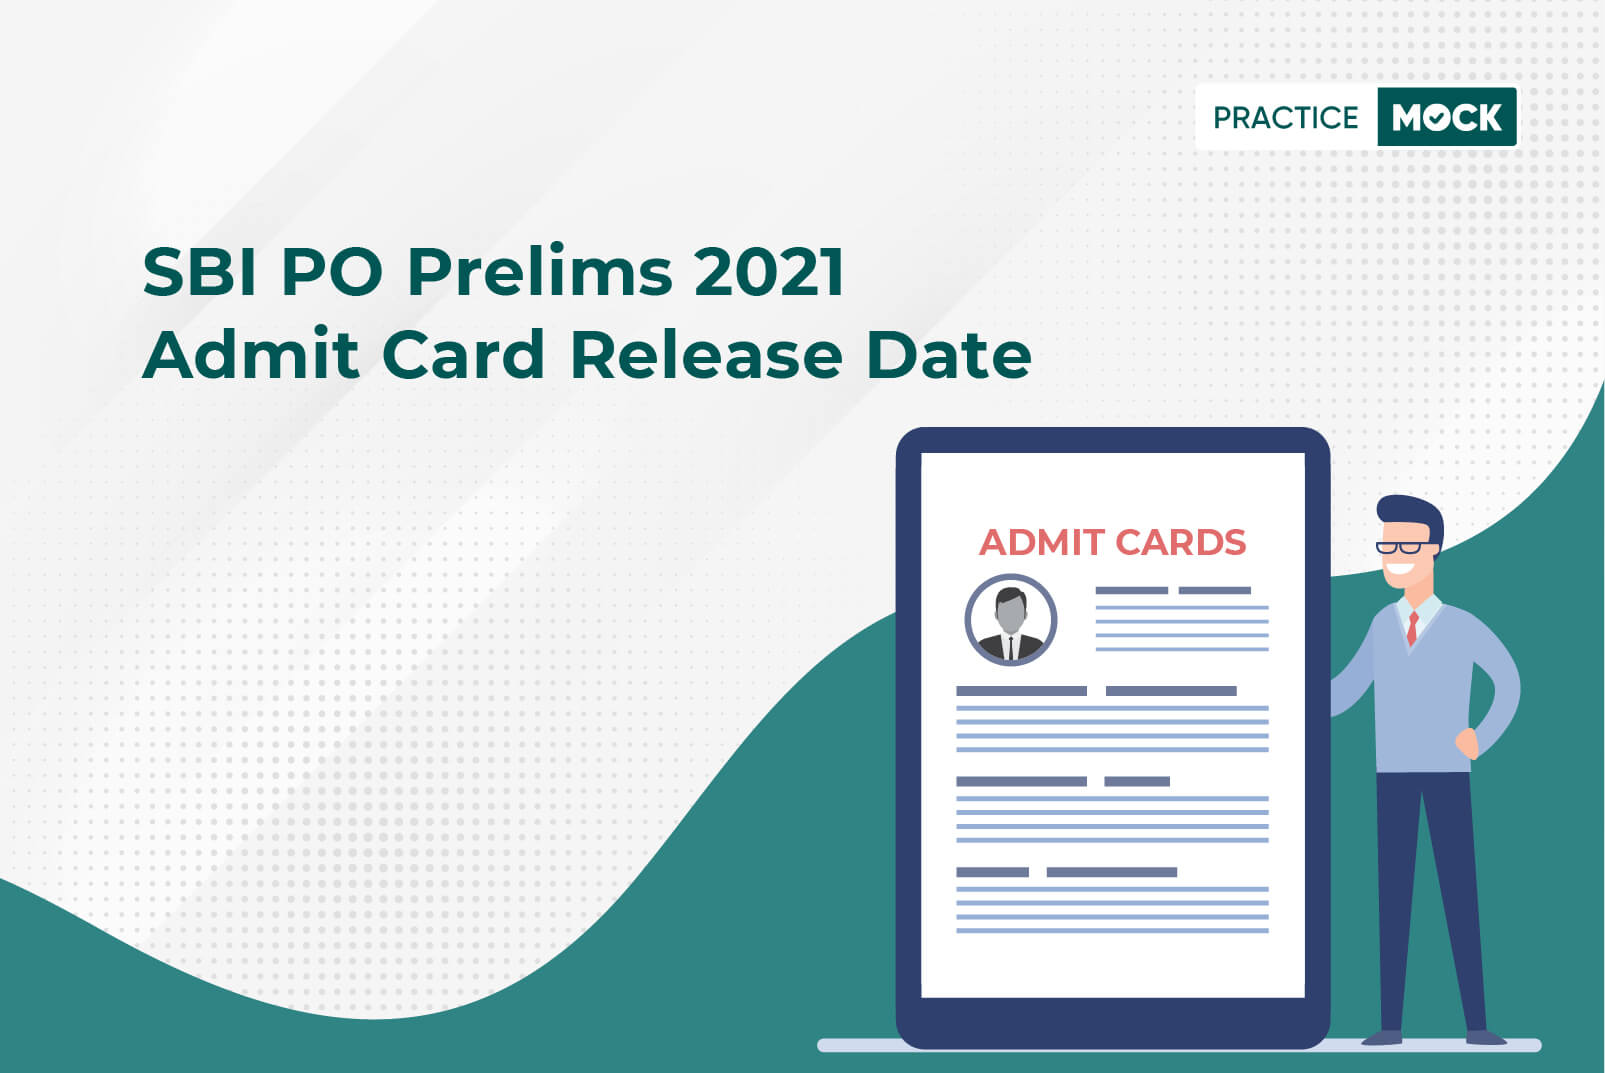 SBI PO Prelims Admit Card Release Date